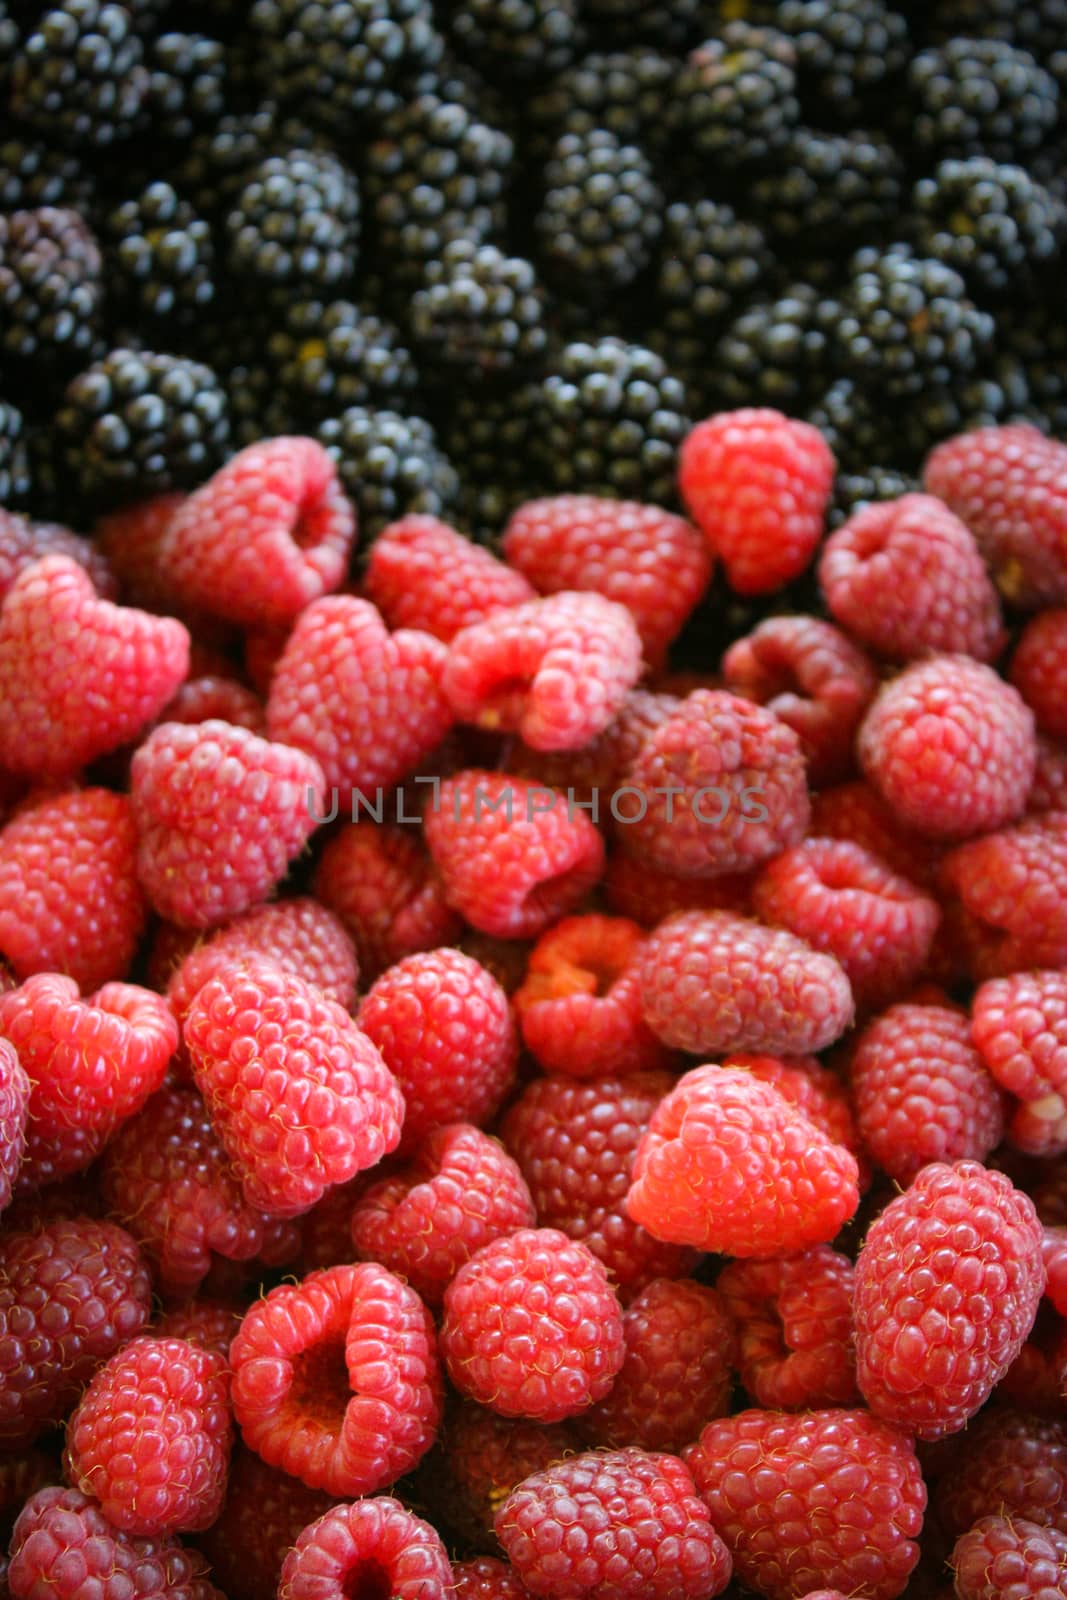 Raspberries and blackberries blurred in background. Zavidovici, Bosnia and Herzegovina.